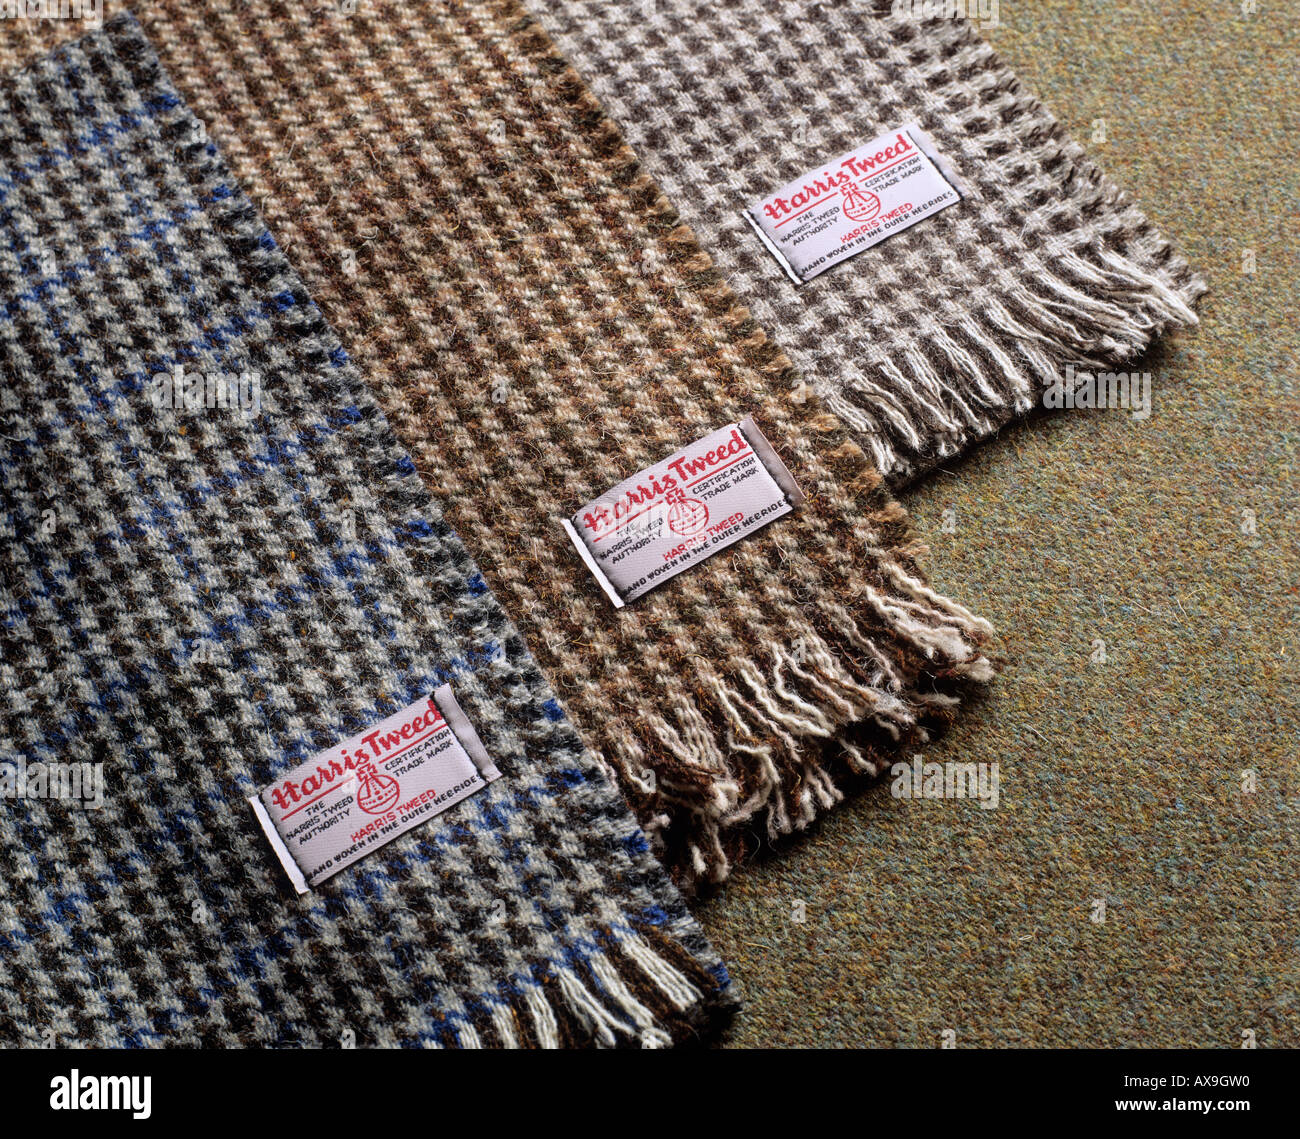 Harris Tweed cloth samples Stock Photo